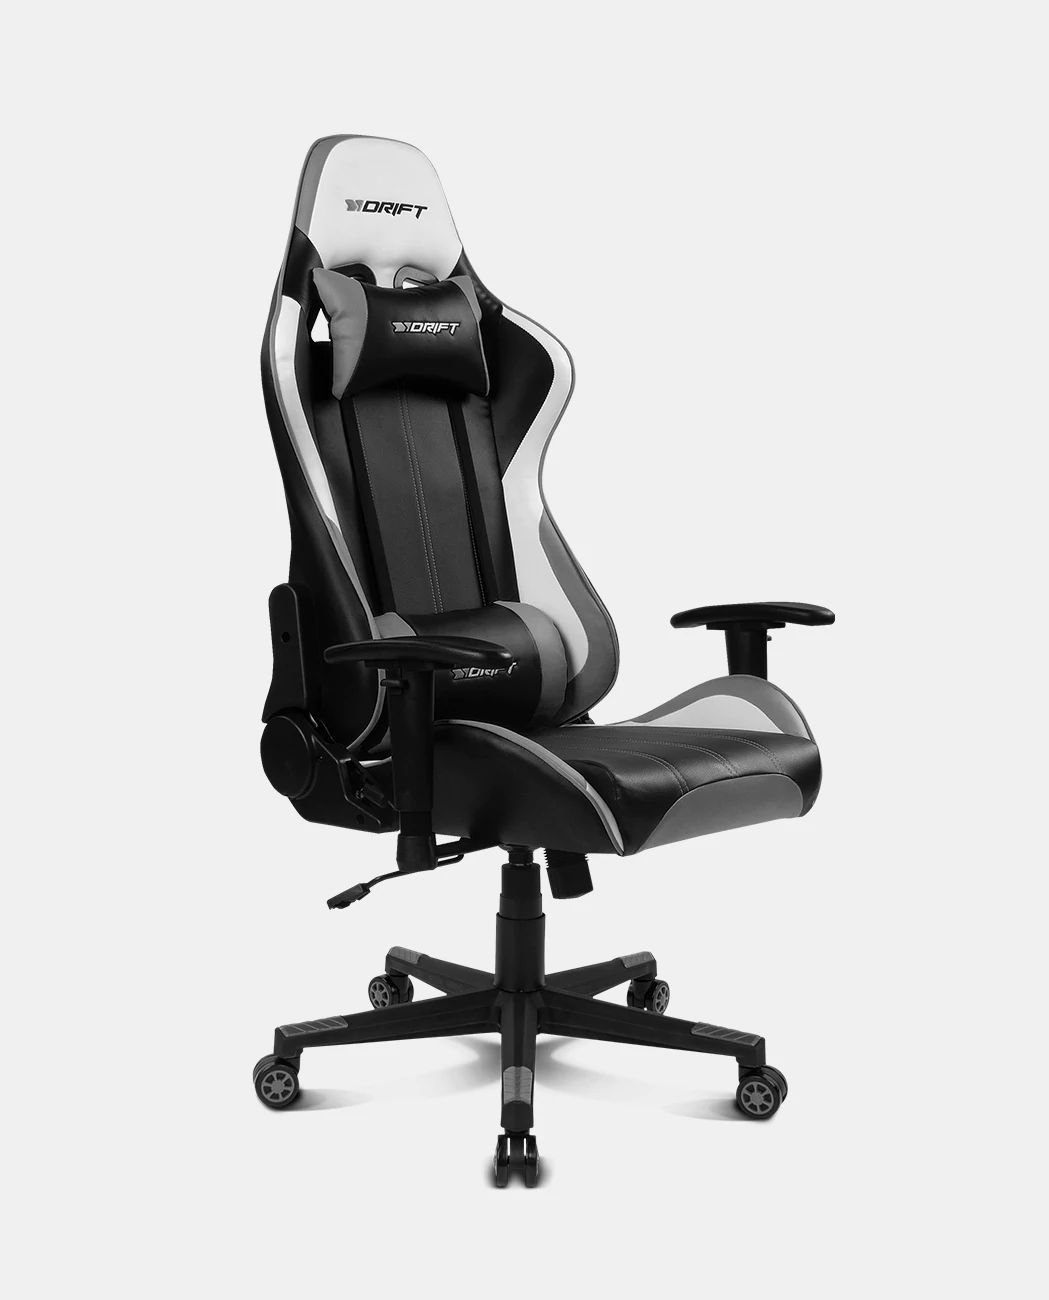 Игровое Кресло DRIFT DR175 PU Leather / black/gray/white